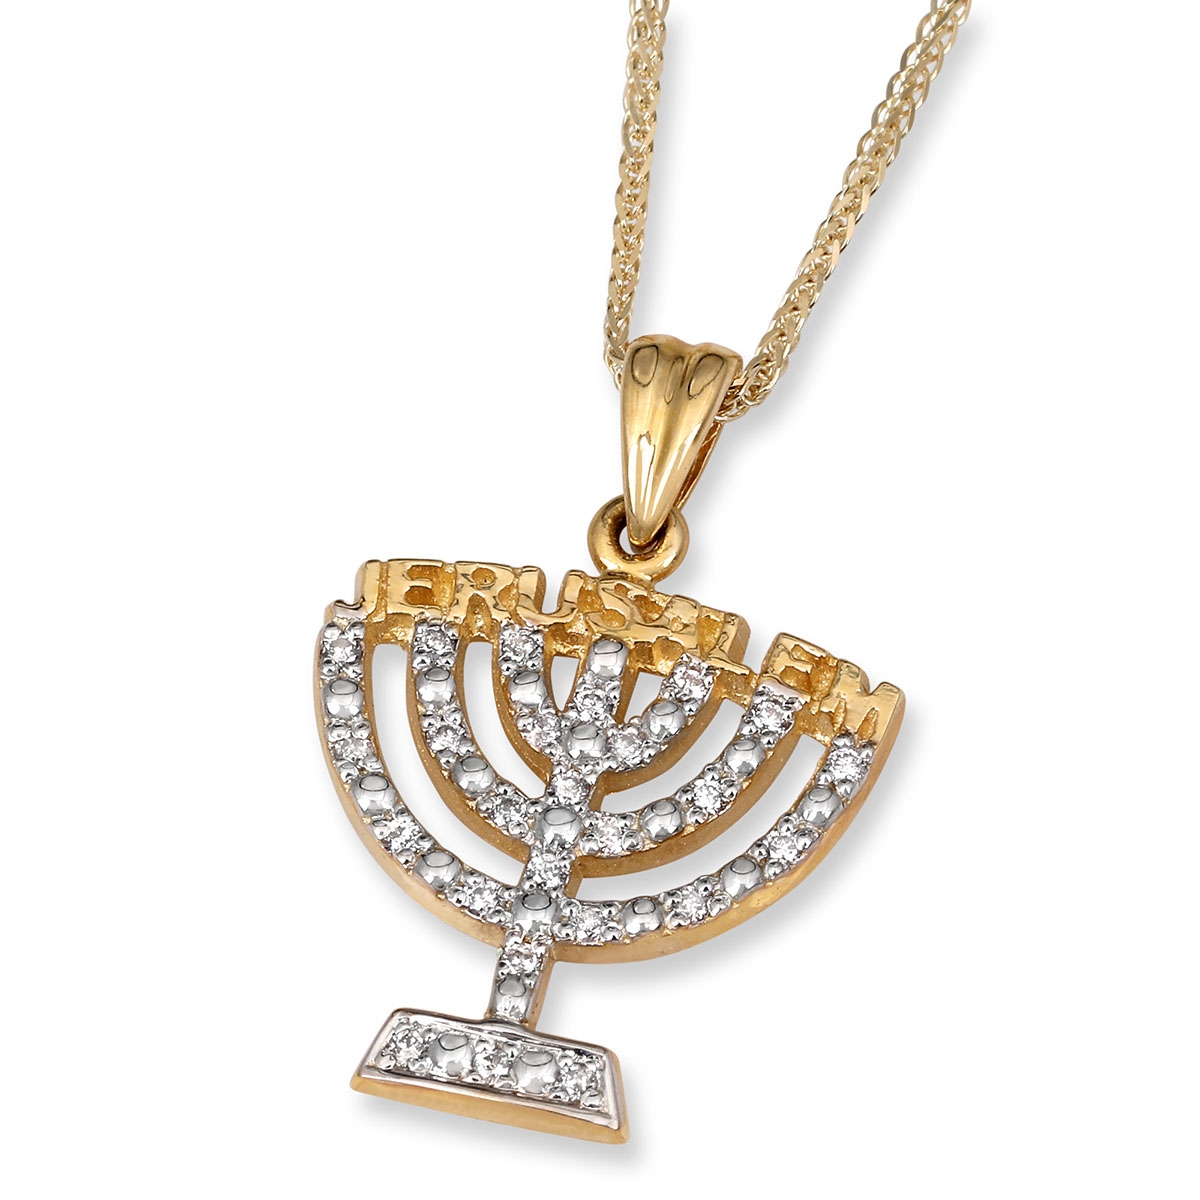 Anbinder Jewelry 14K Yellow Gold Diamond-Accented Menorah Pendant With Jerusalem Design - 1